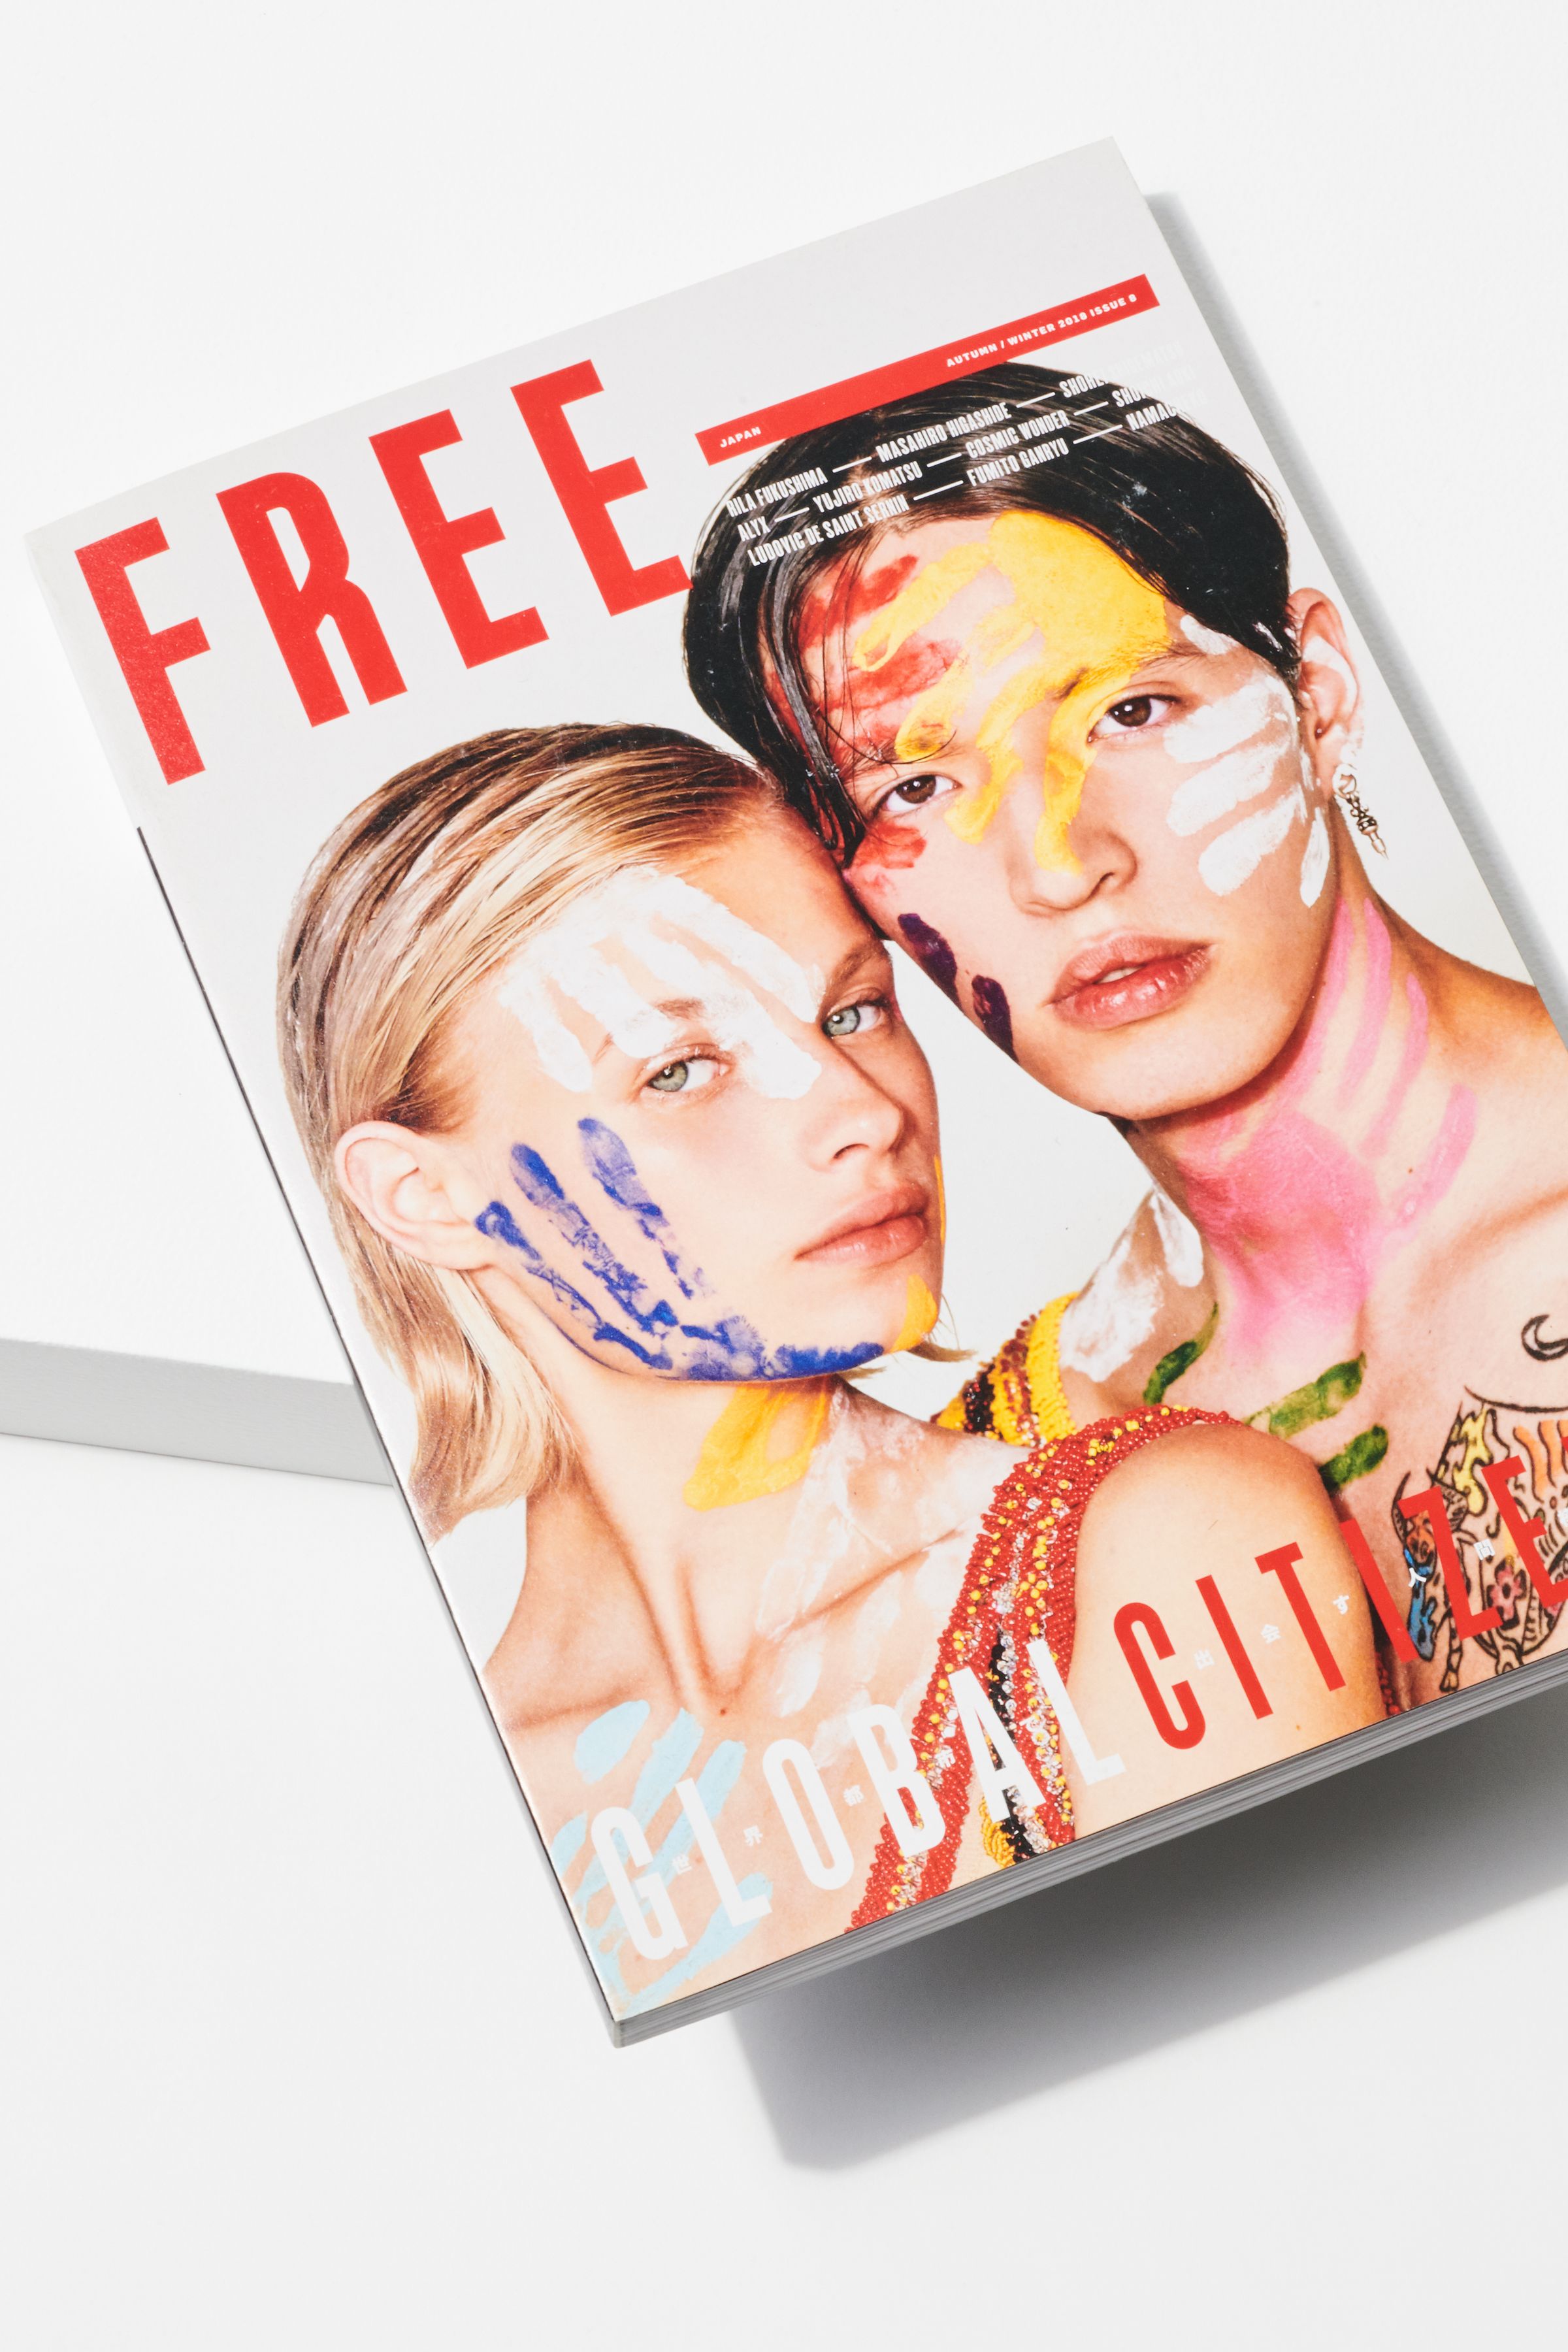 Free Magazine cover design